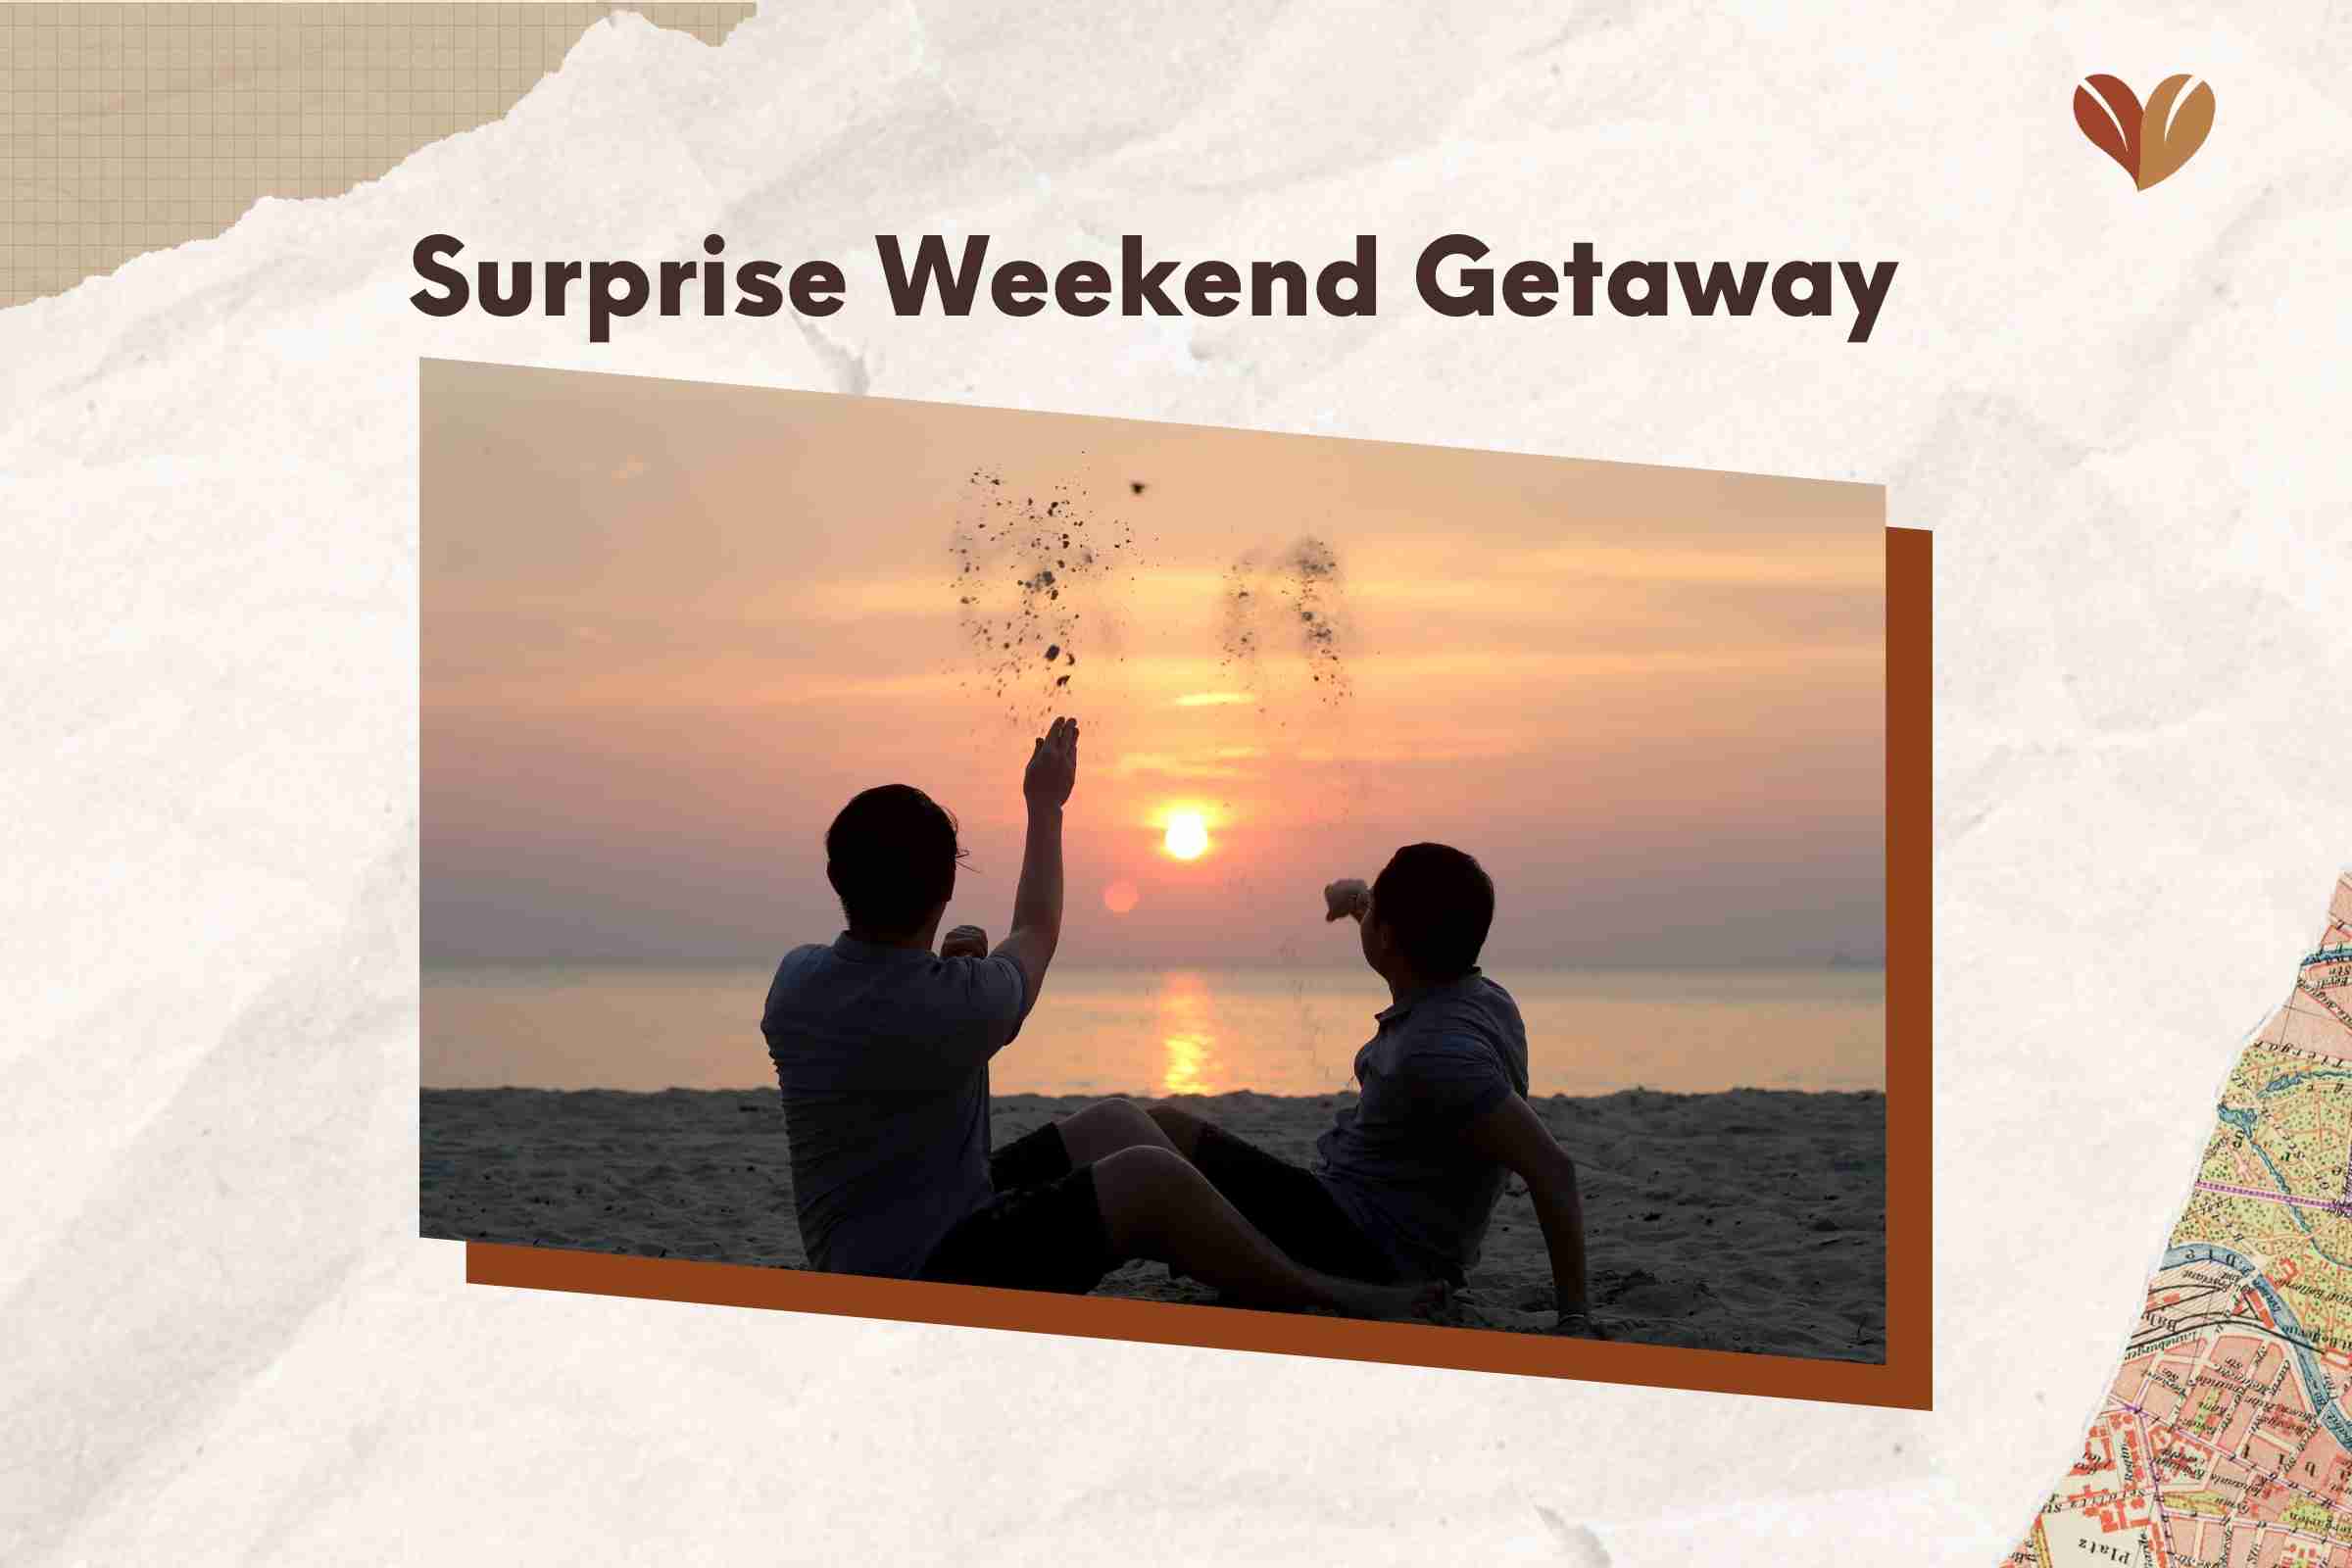 Surprise weekend getaways allow you to make unforgettable memories.